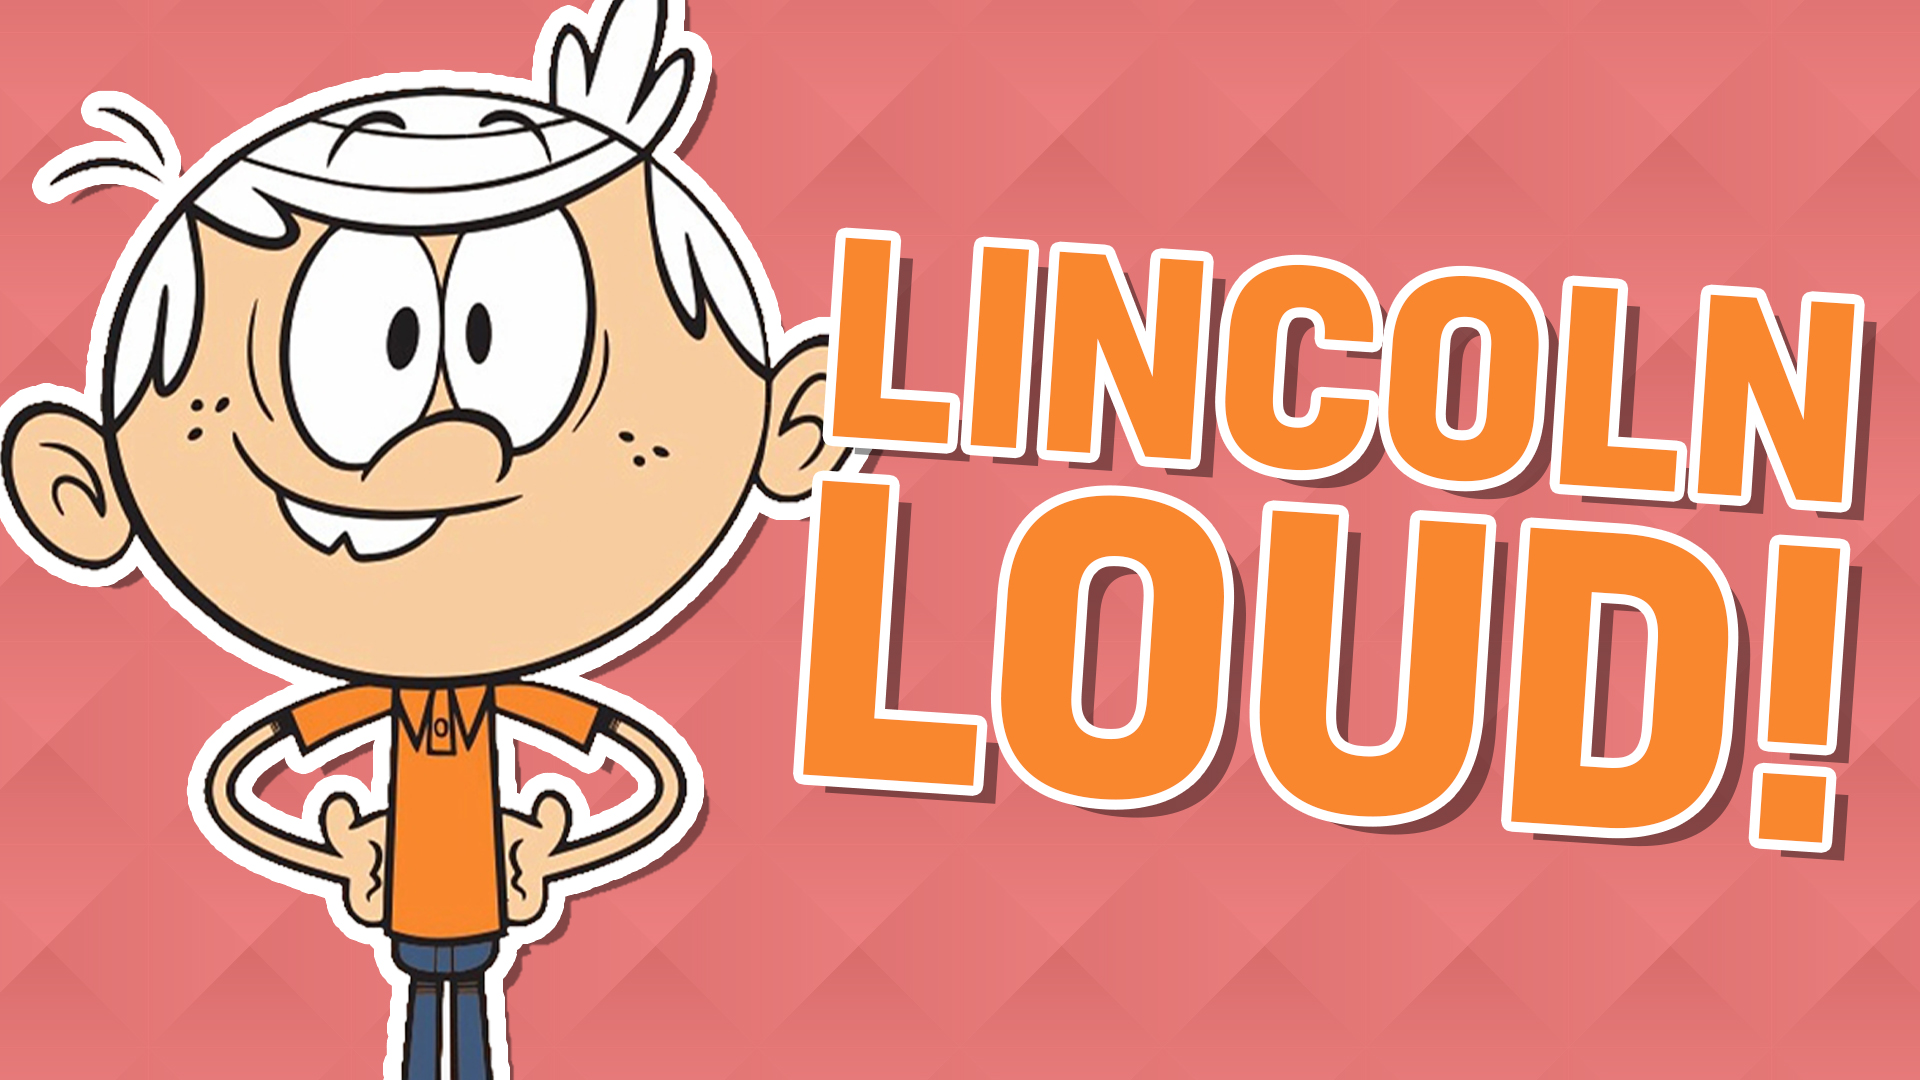 Lincoln Loud